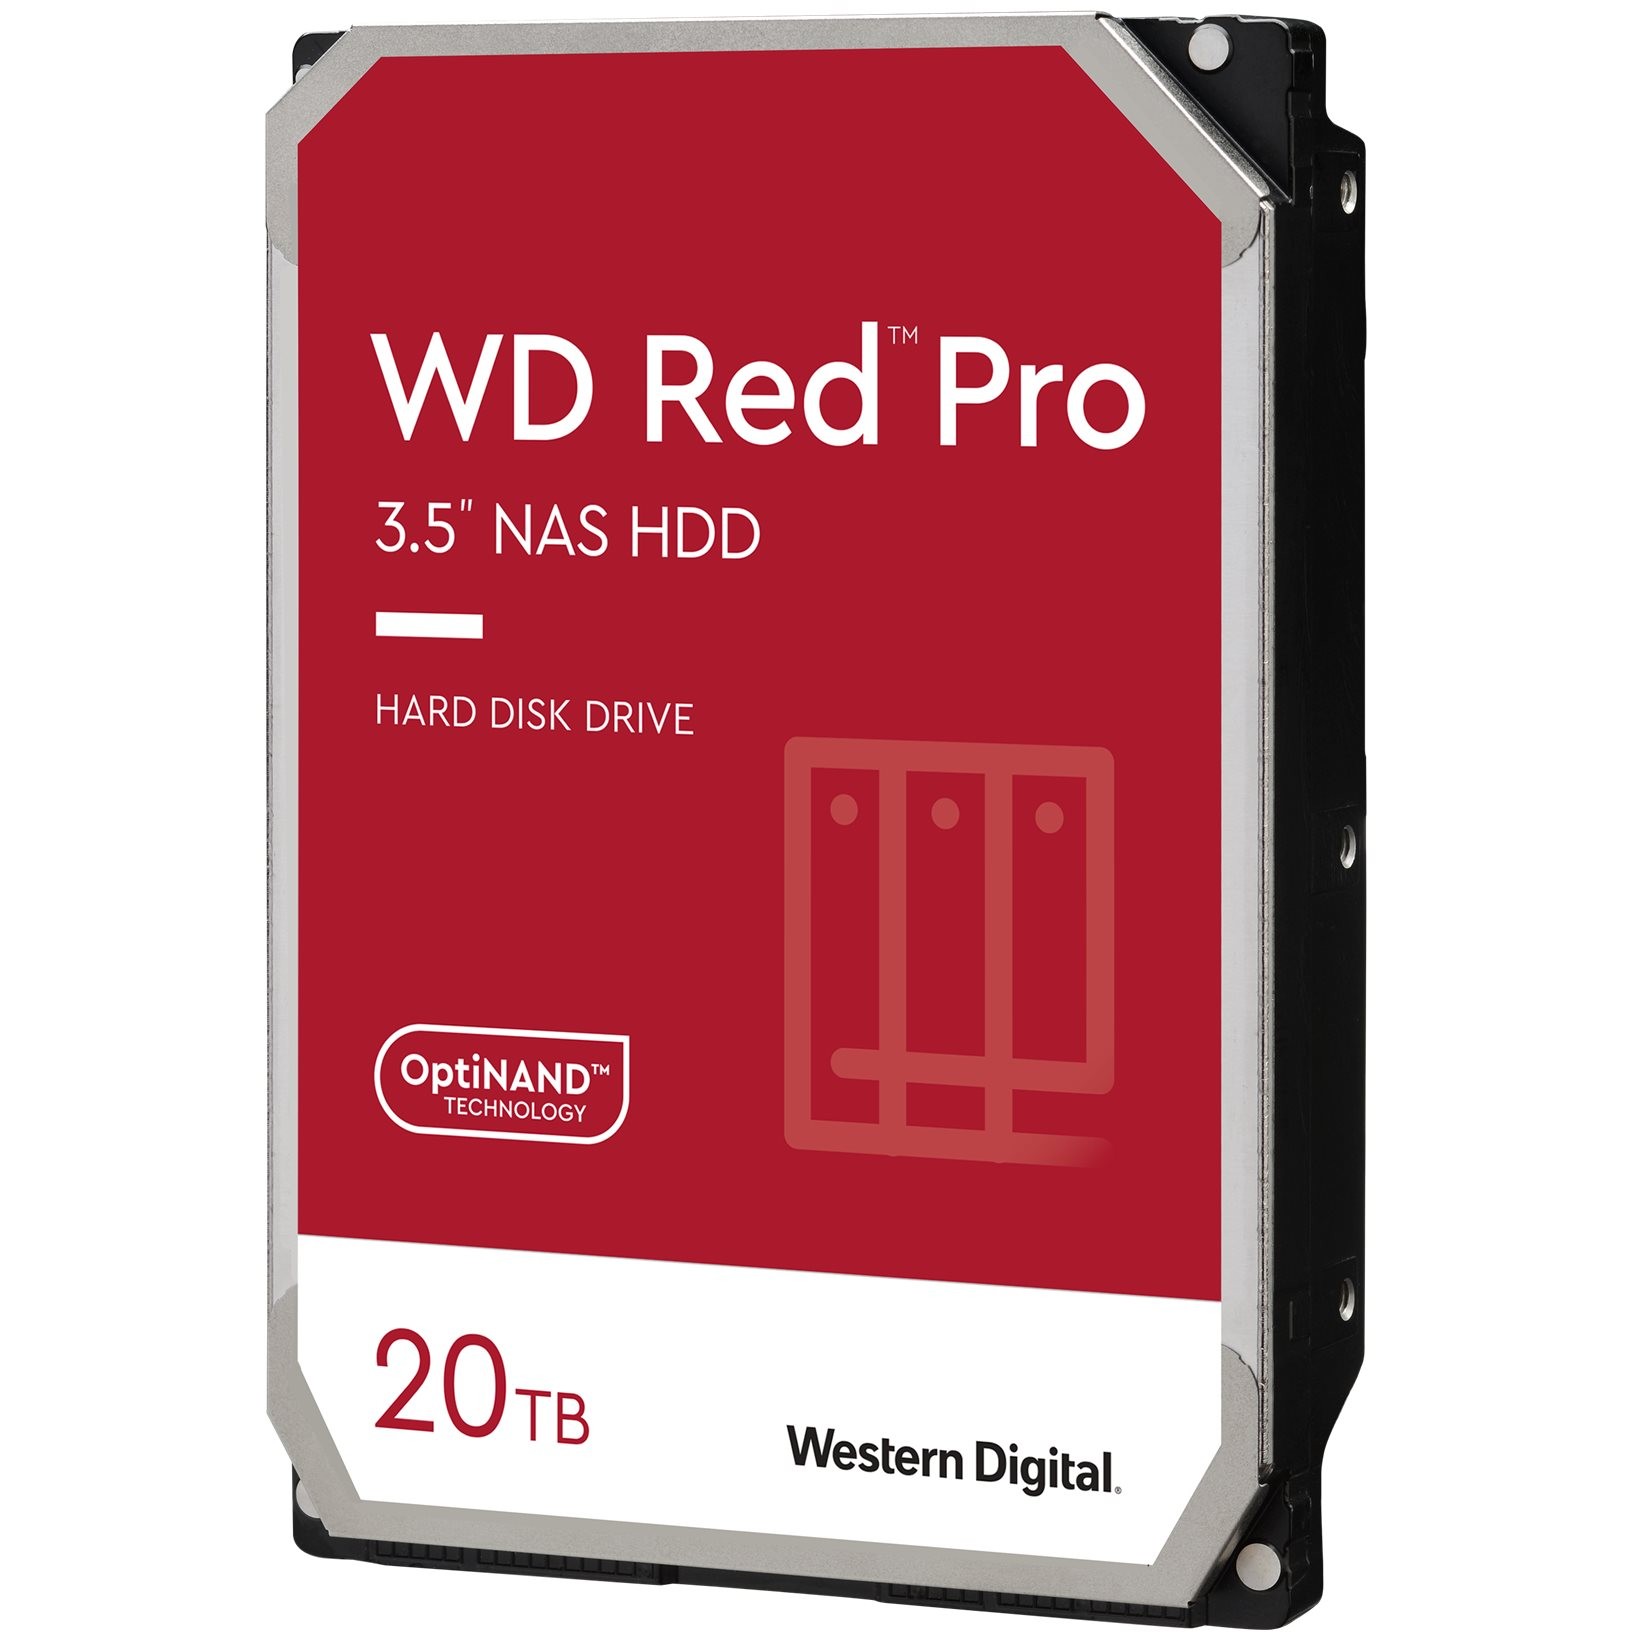 Western Digital Red Plus WD201KFGX internal hard drive